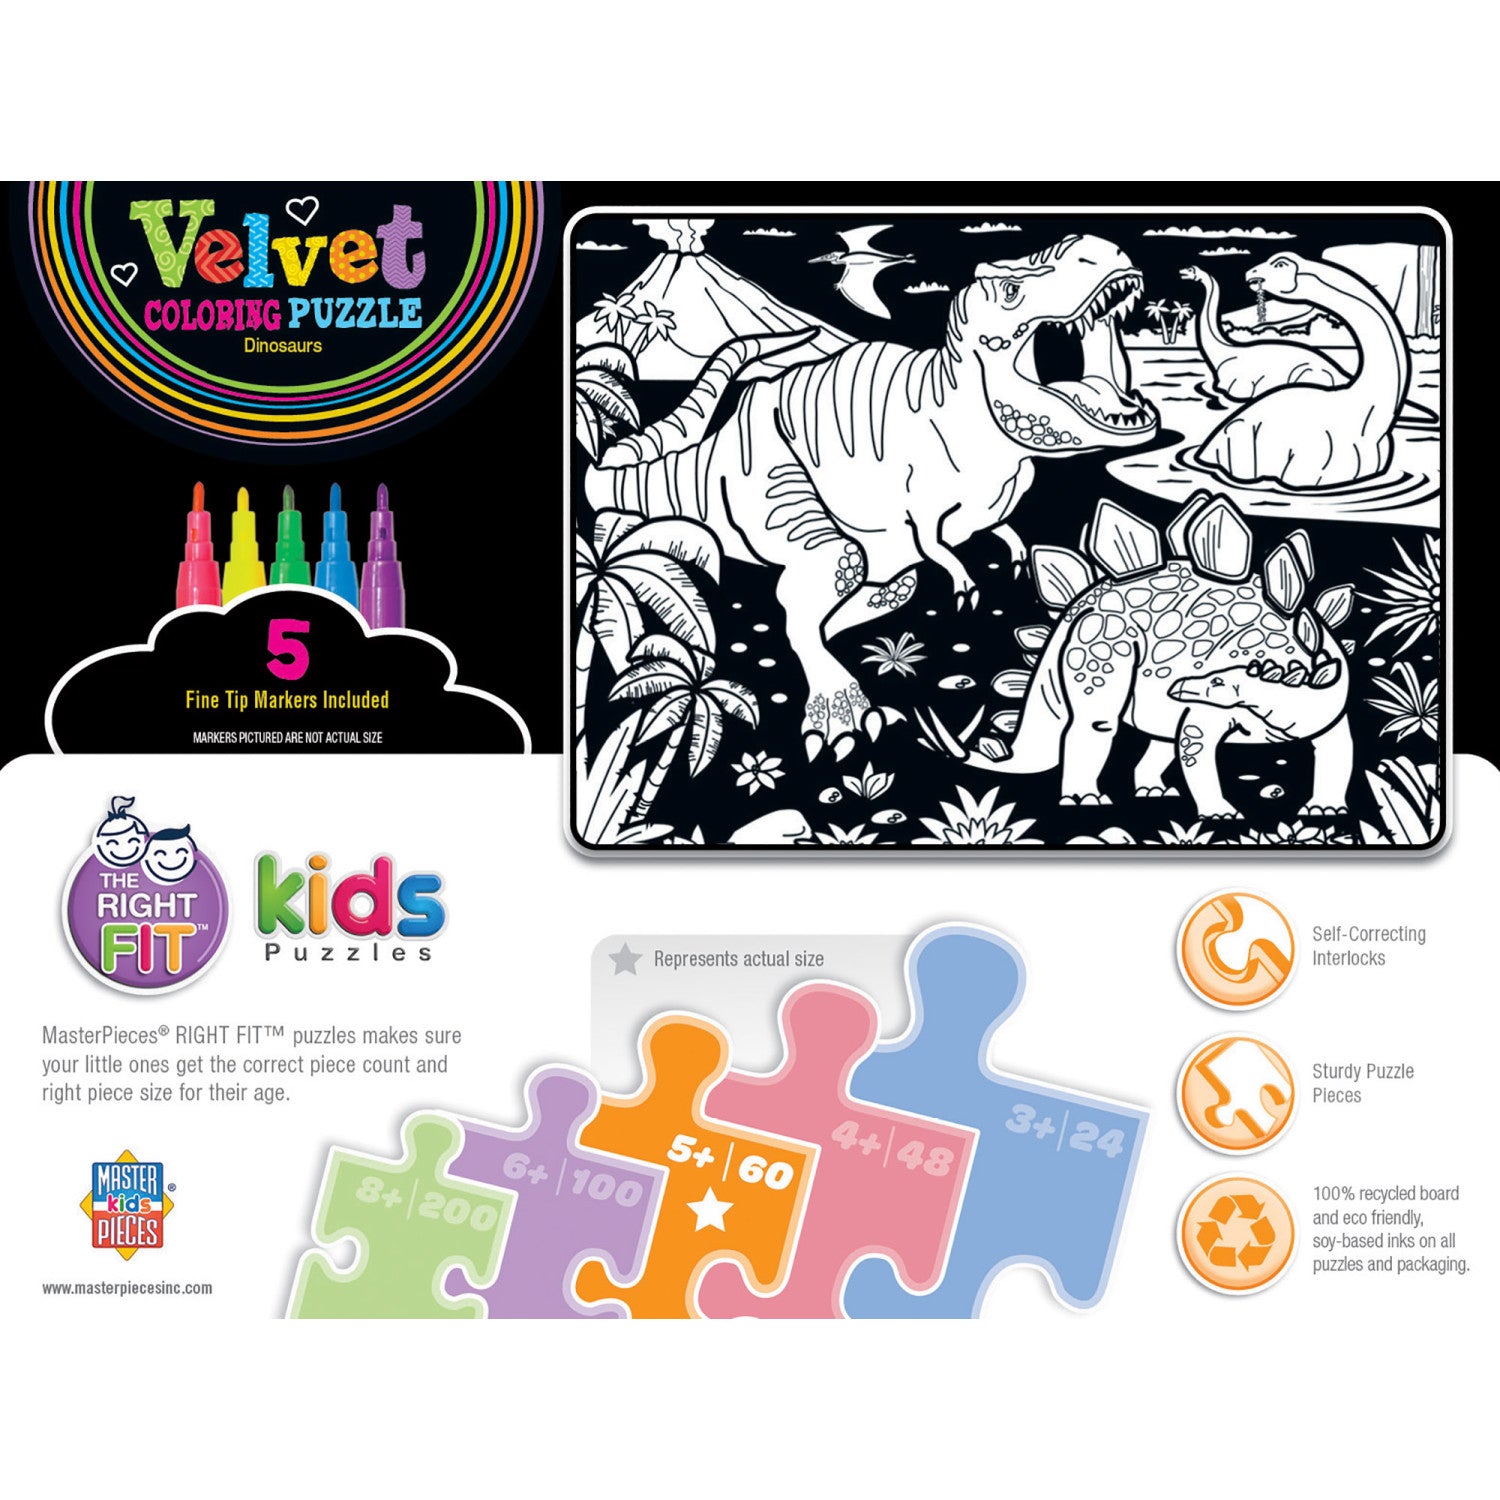 Velvet Coloring - Dinosaurs 60 Piece Jigsaw Puzzle